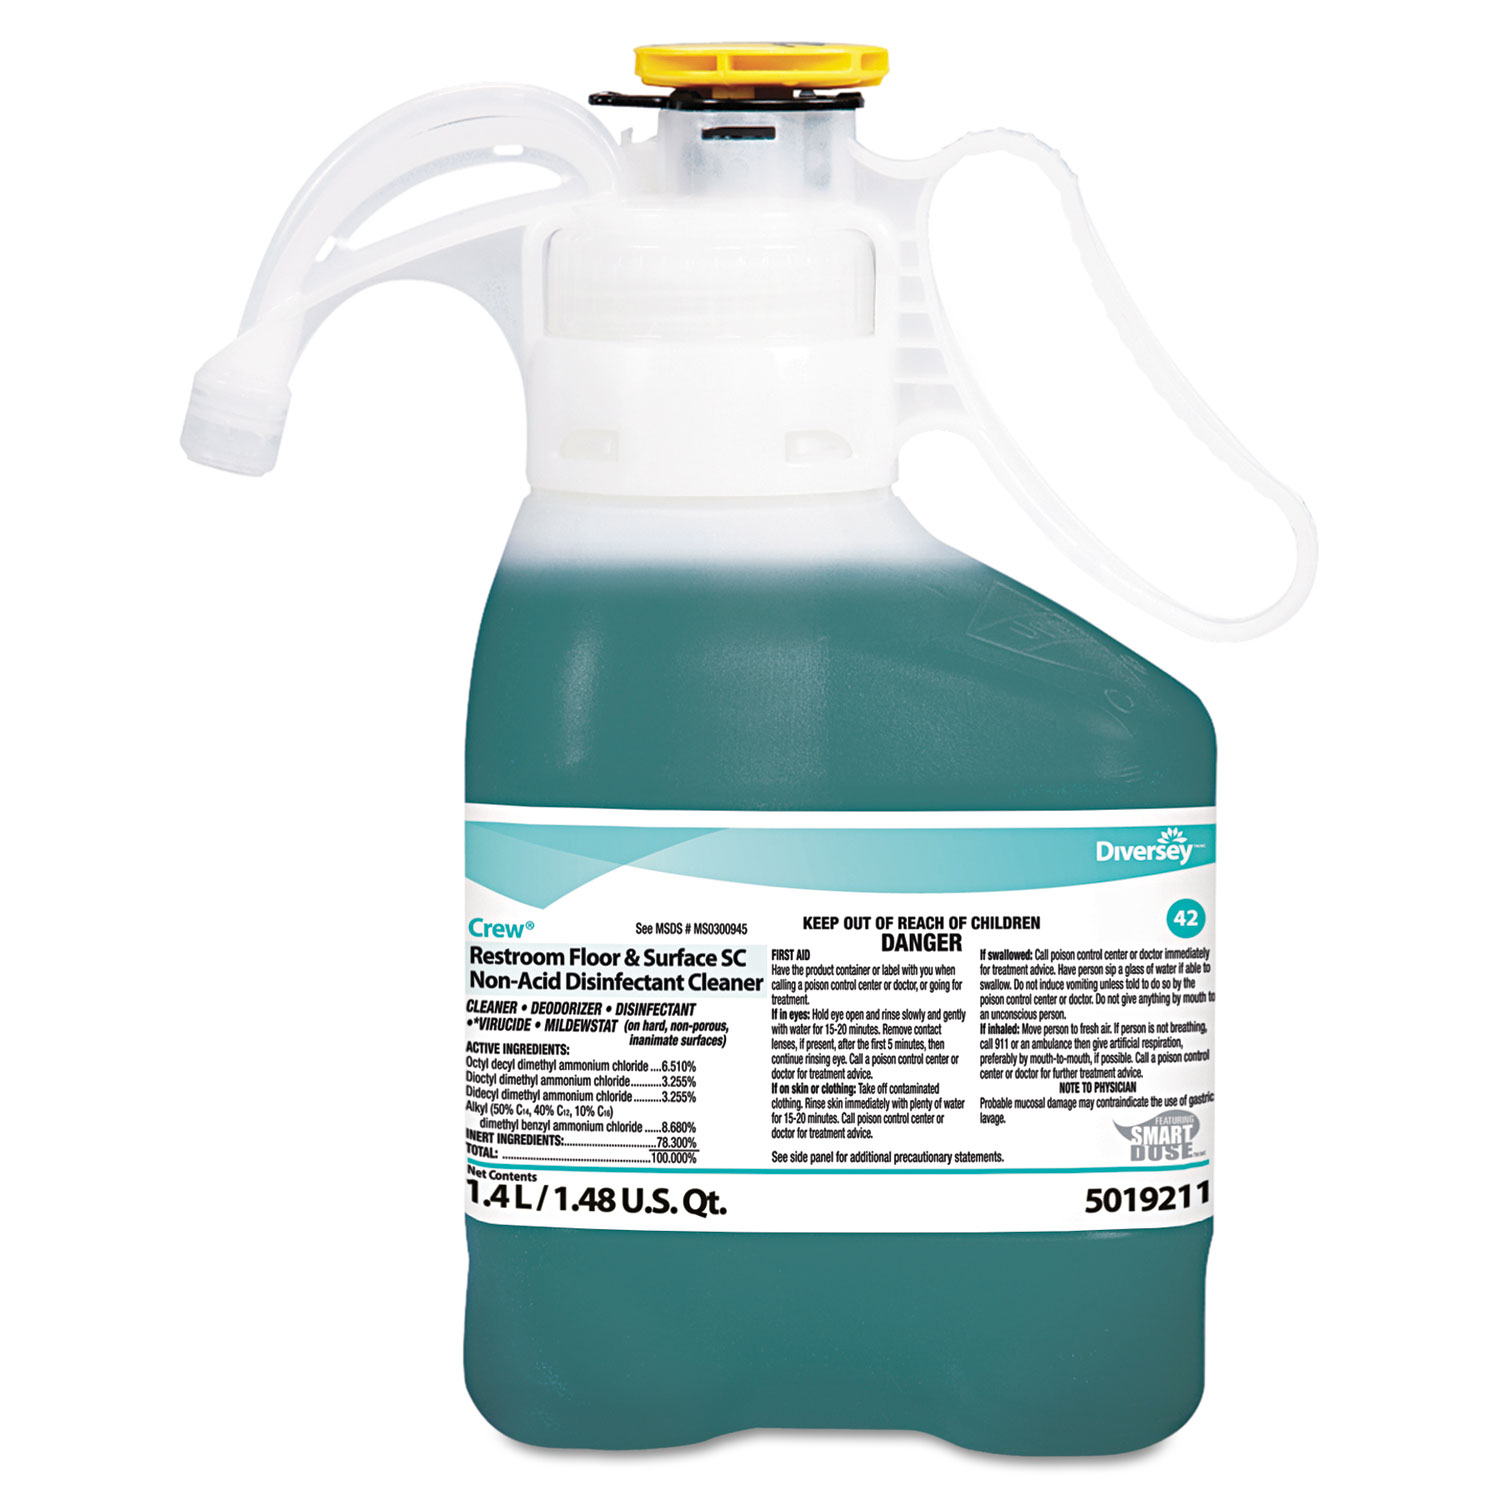  Diversey 5019211 Crew Restroom Floor/Surface Non-Acid Disinfectant Cleaner, 1.4L Bottle, 2/CT (DVO5019211) 